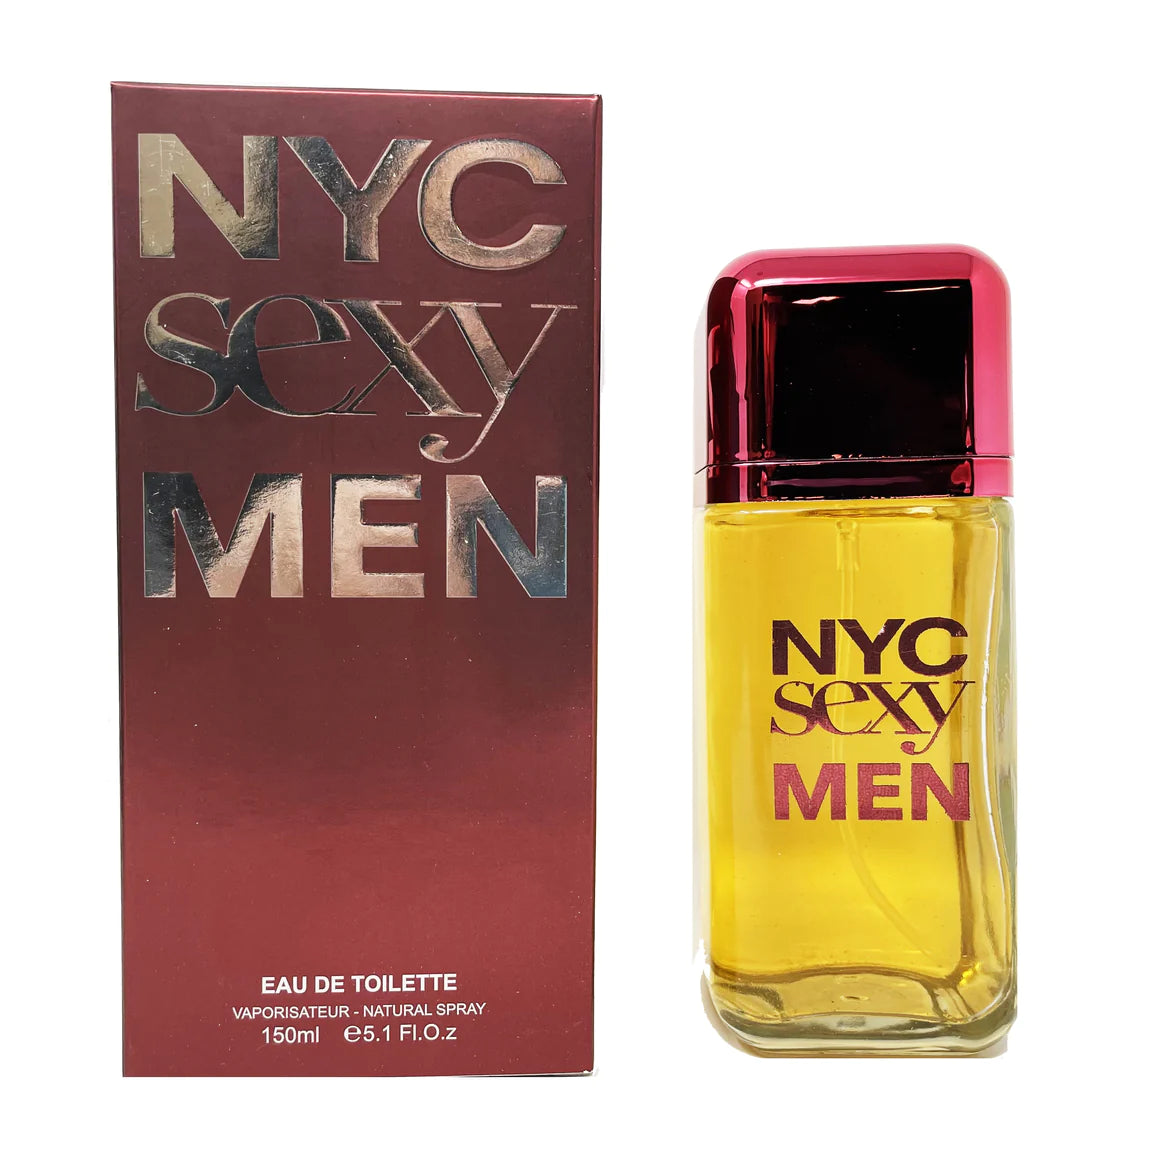 NYC Sexy Men EDT van Fragrance couture